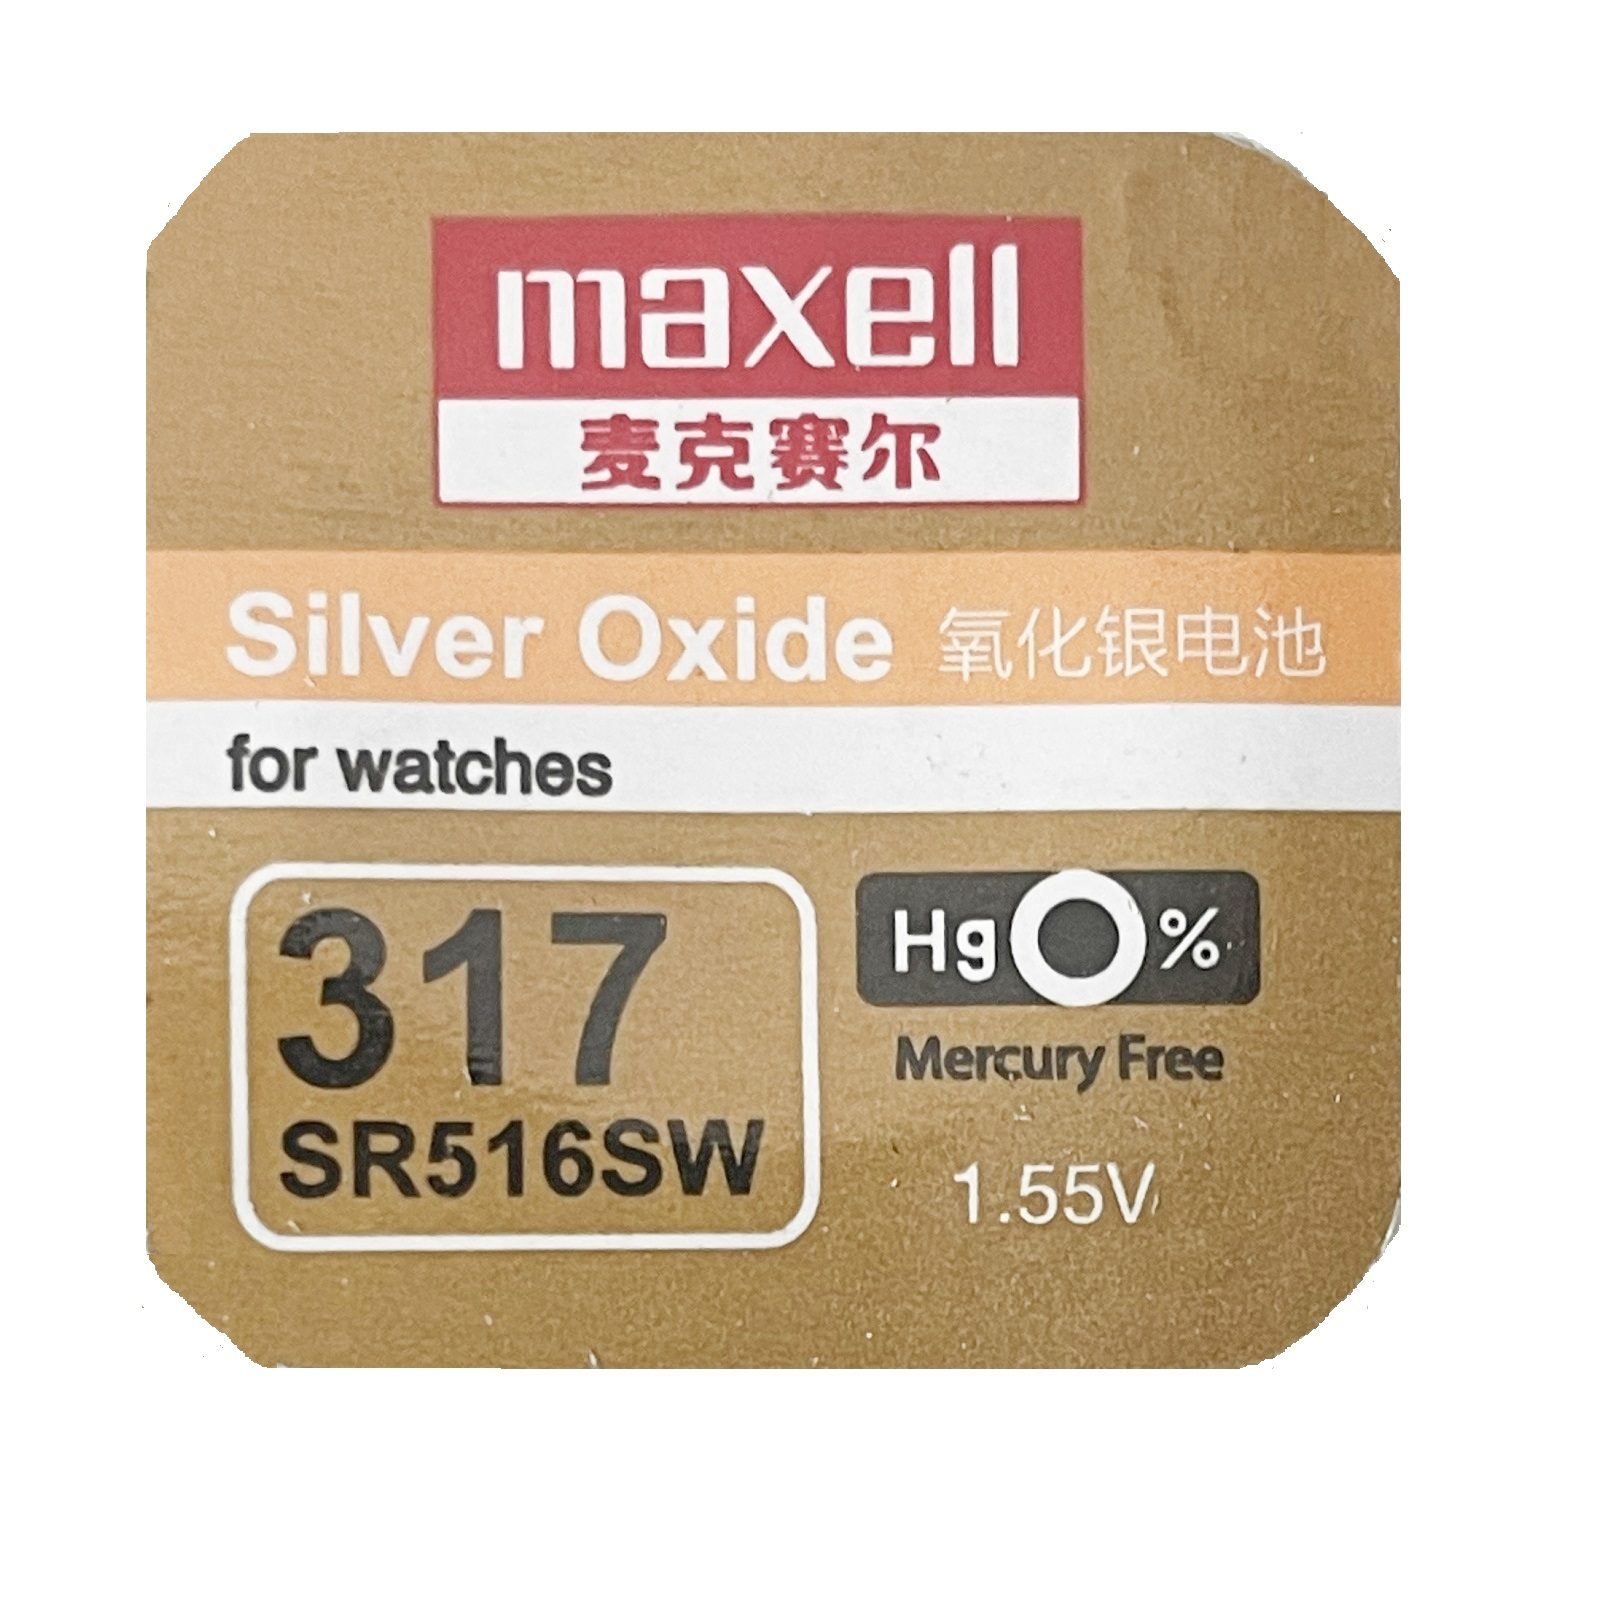 Maxell 321 SR616SW Silver Oxide Button Battery (1 Piece)